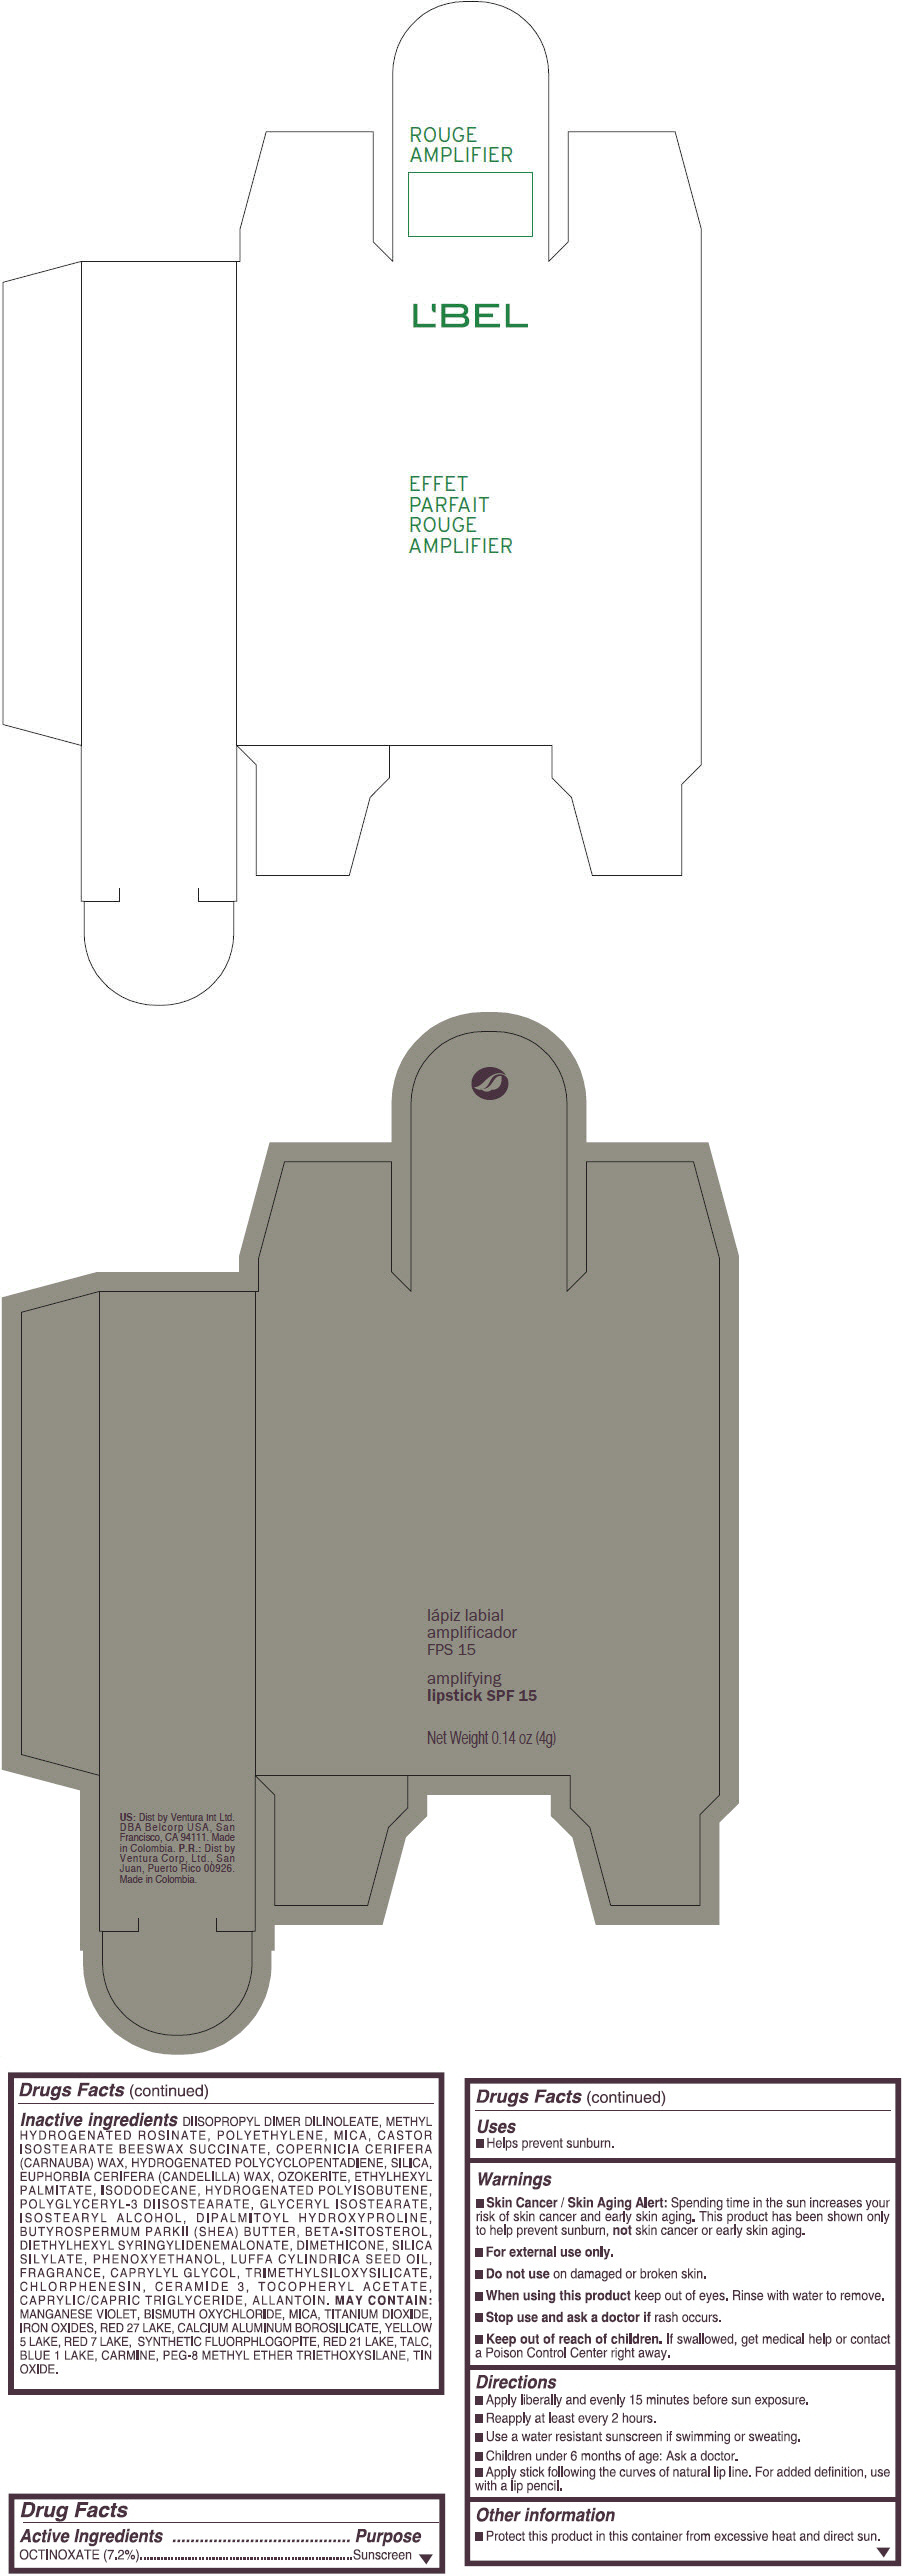 PRINCIPAL DISPLAY PANEL - 4 g Tube Box - (SOBRIETE) - BROWN